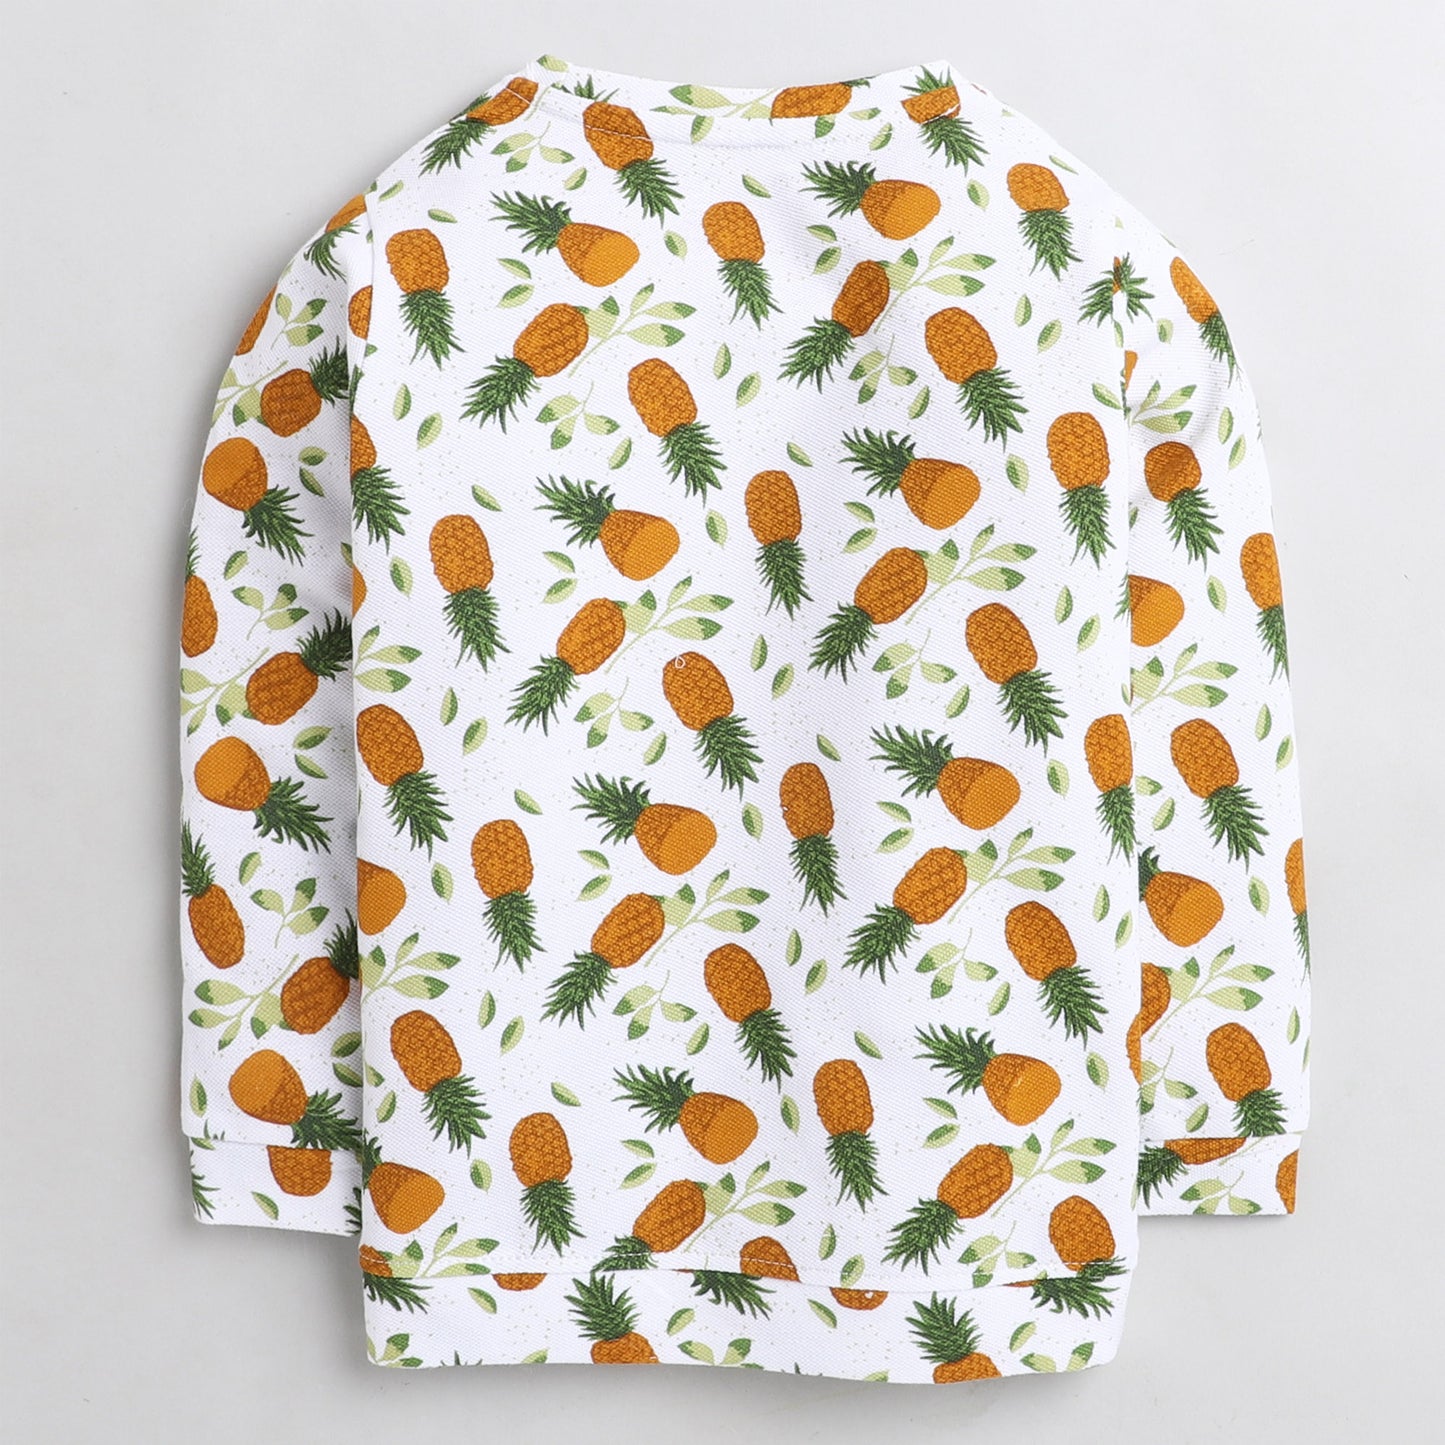 Polka Tots Pineapple Full sleeve tshirt with lounge pant set - White